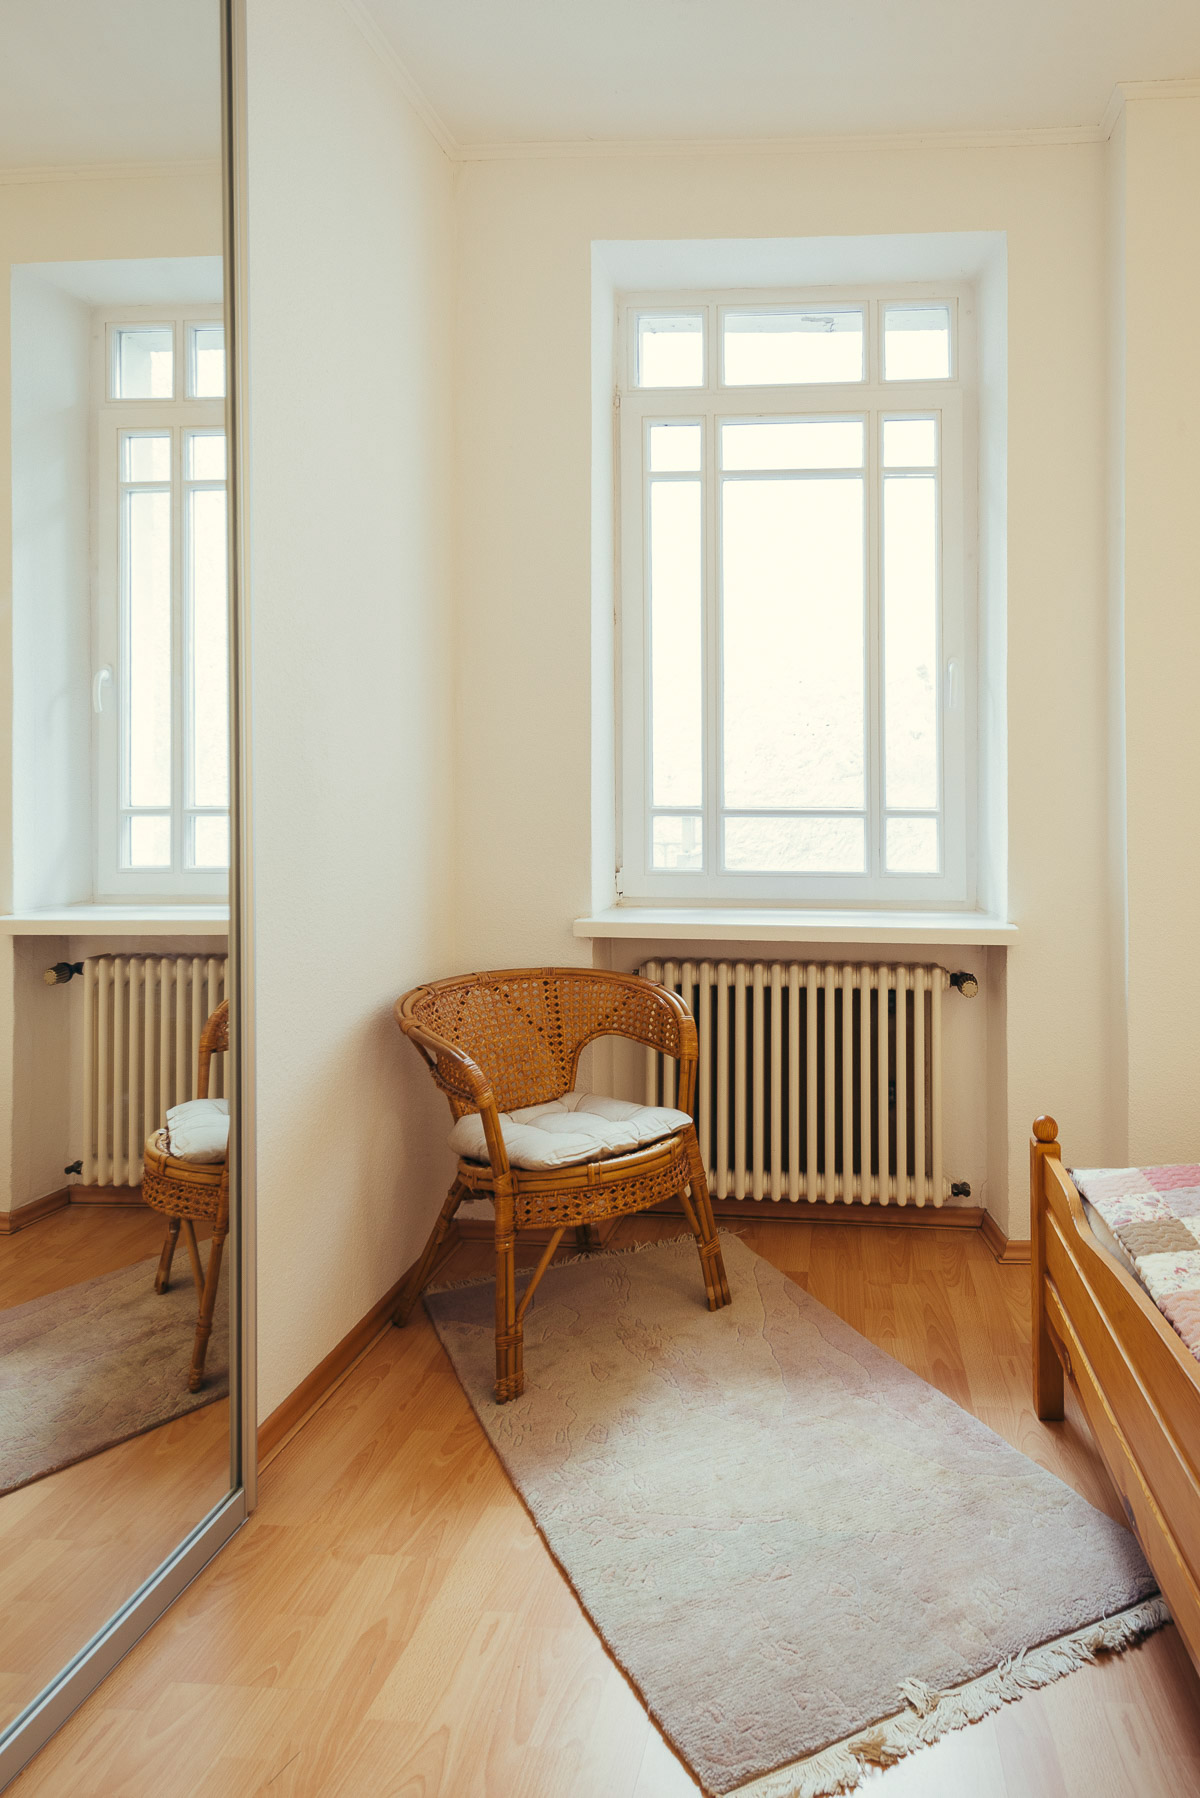 Adobe Portfolio airbnb vacation flat listing image architecture Interior furniture light bright